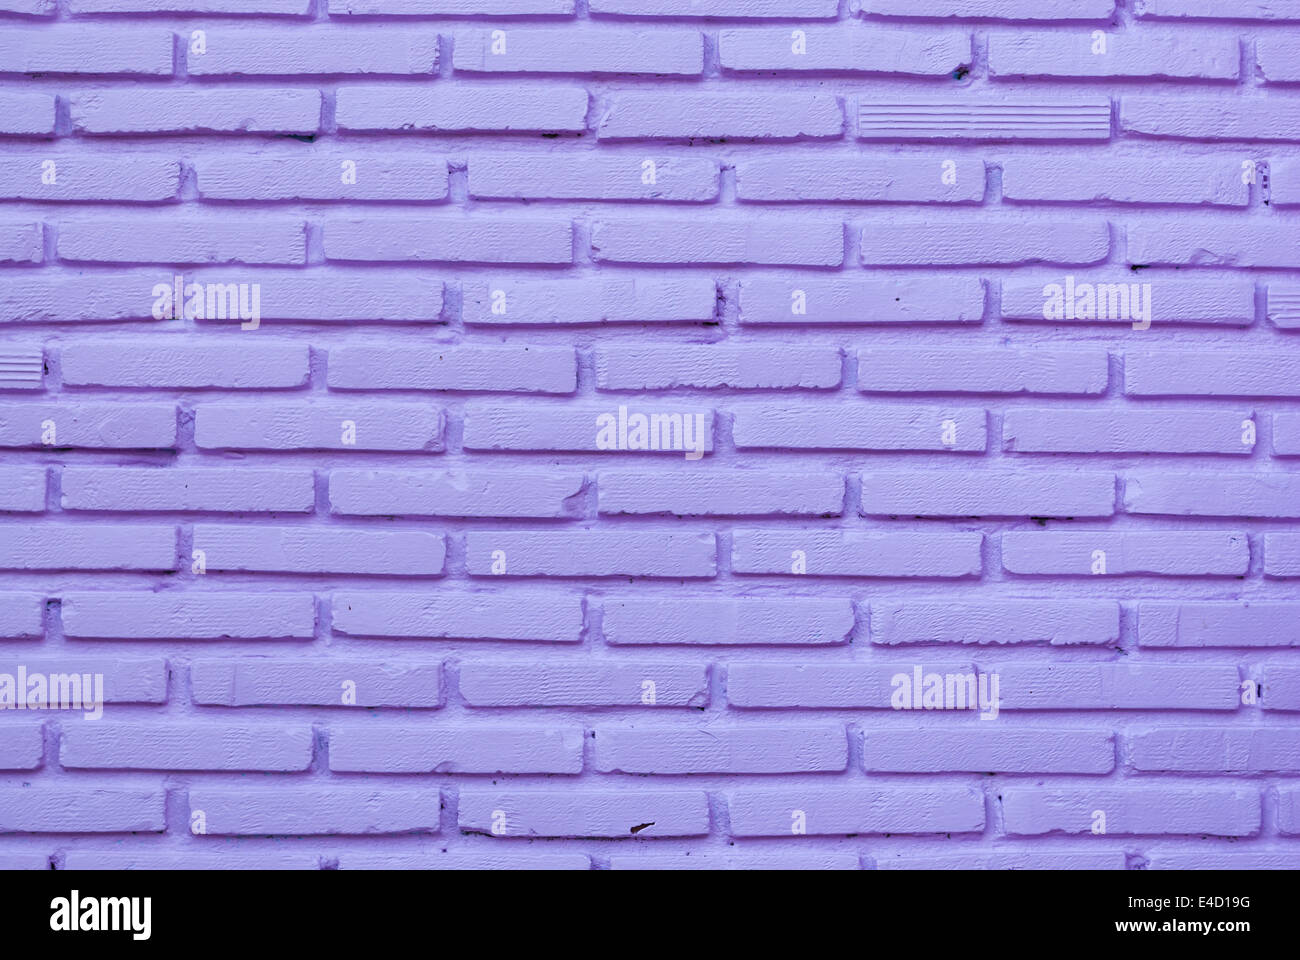 Purple Brick Wall Background/ Texture. Stock Photo